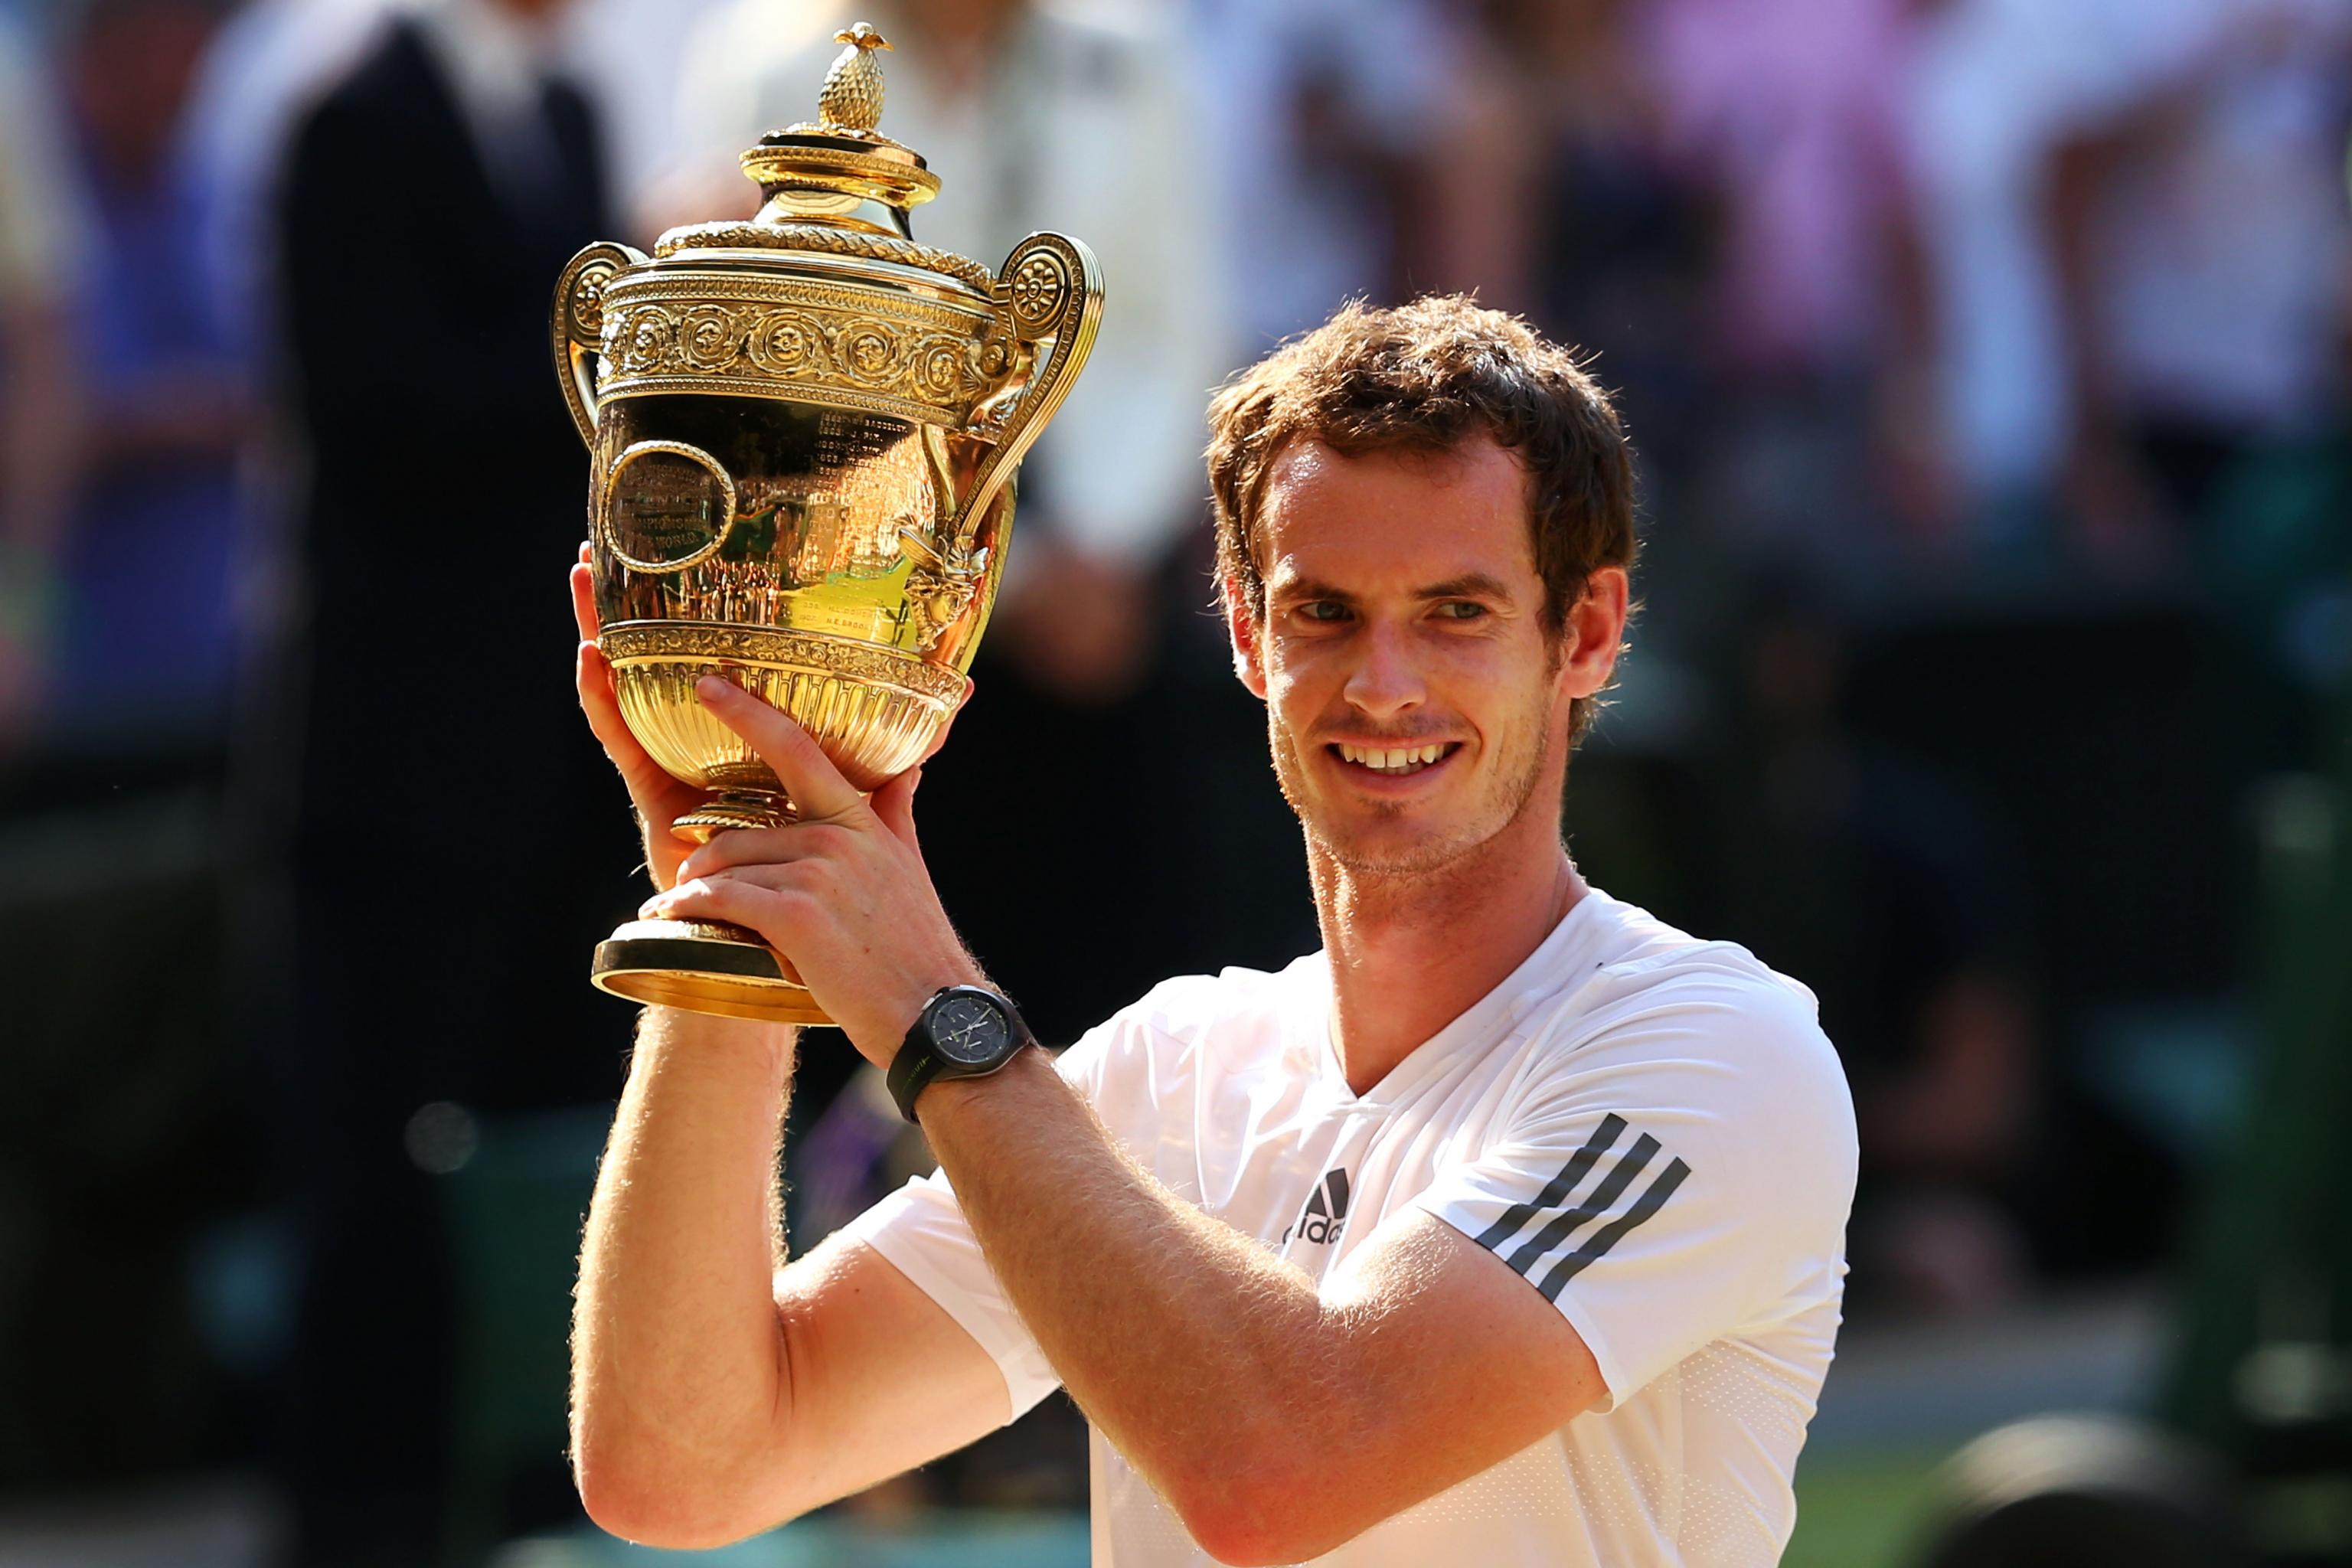 Wimbledon 2022 LIVE: Novak Djokovic RICHEST tennis player at Wimbledon, Check Top 5 richest players at Wimbledon 2022